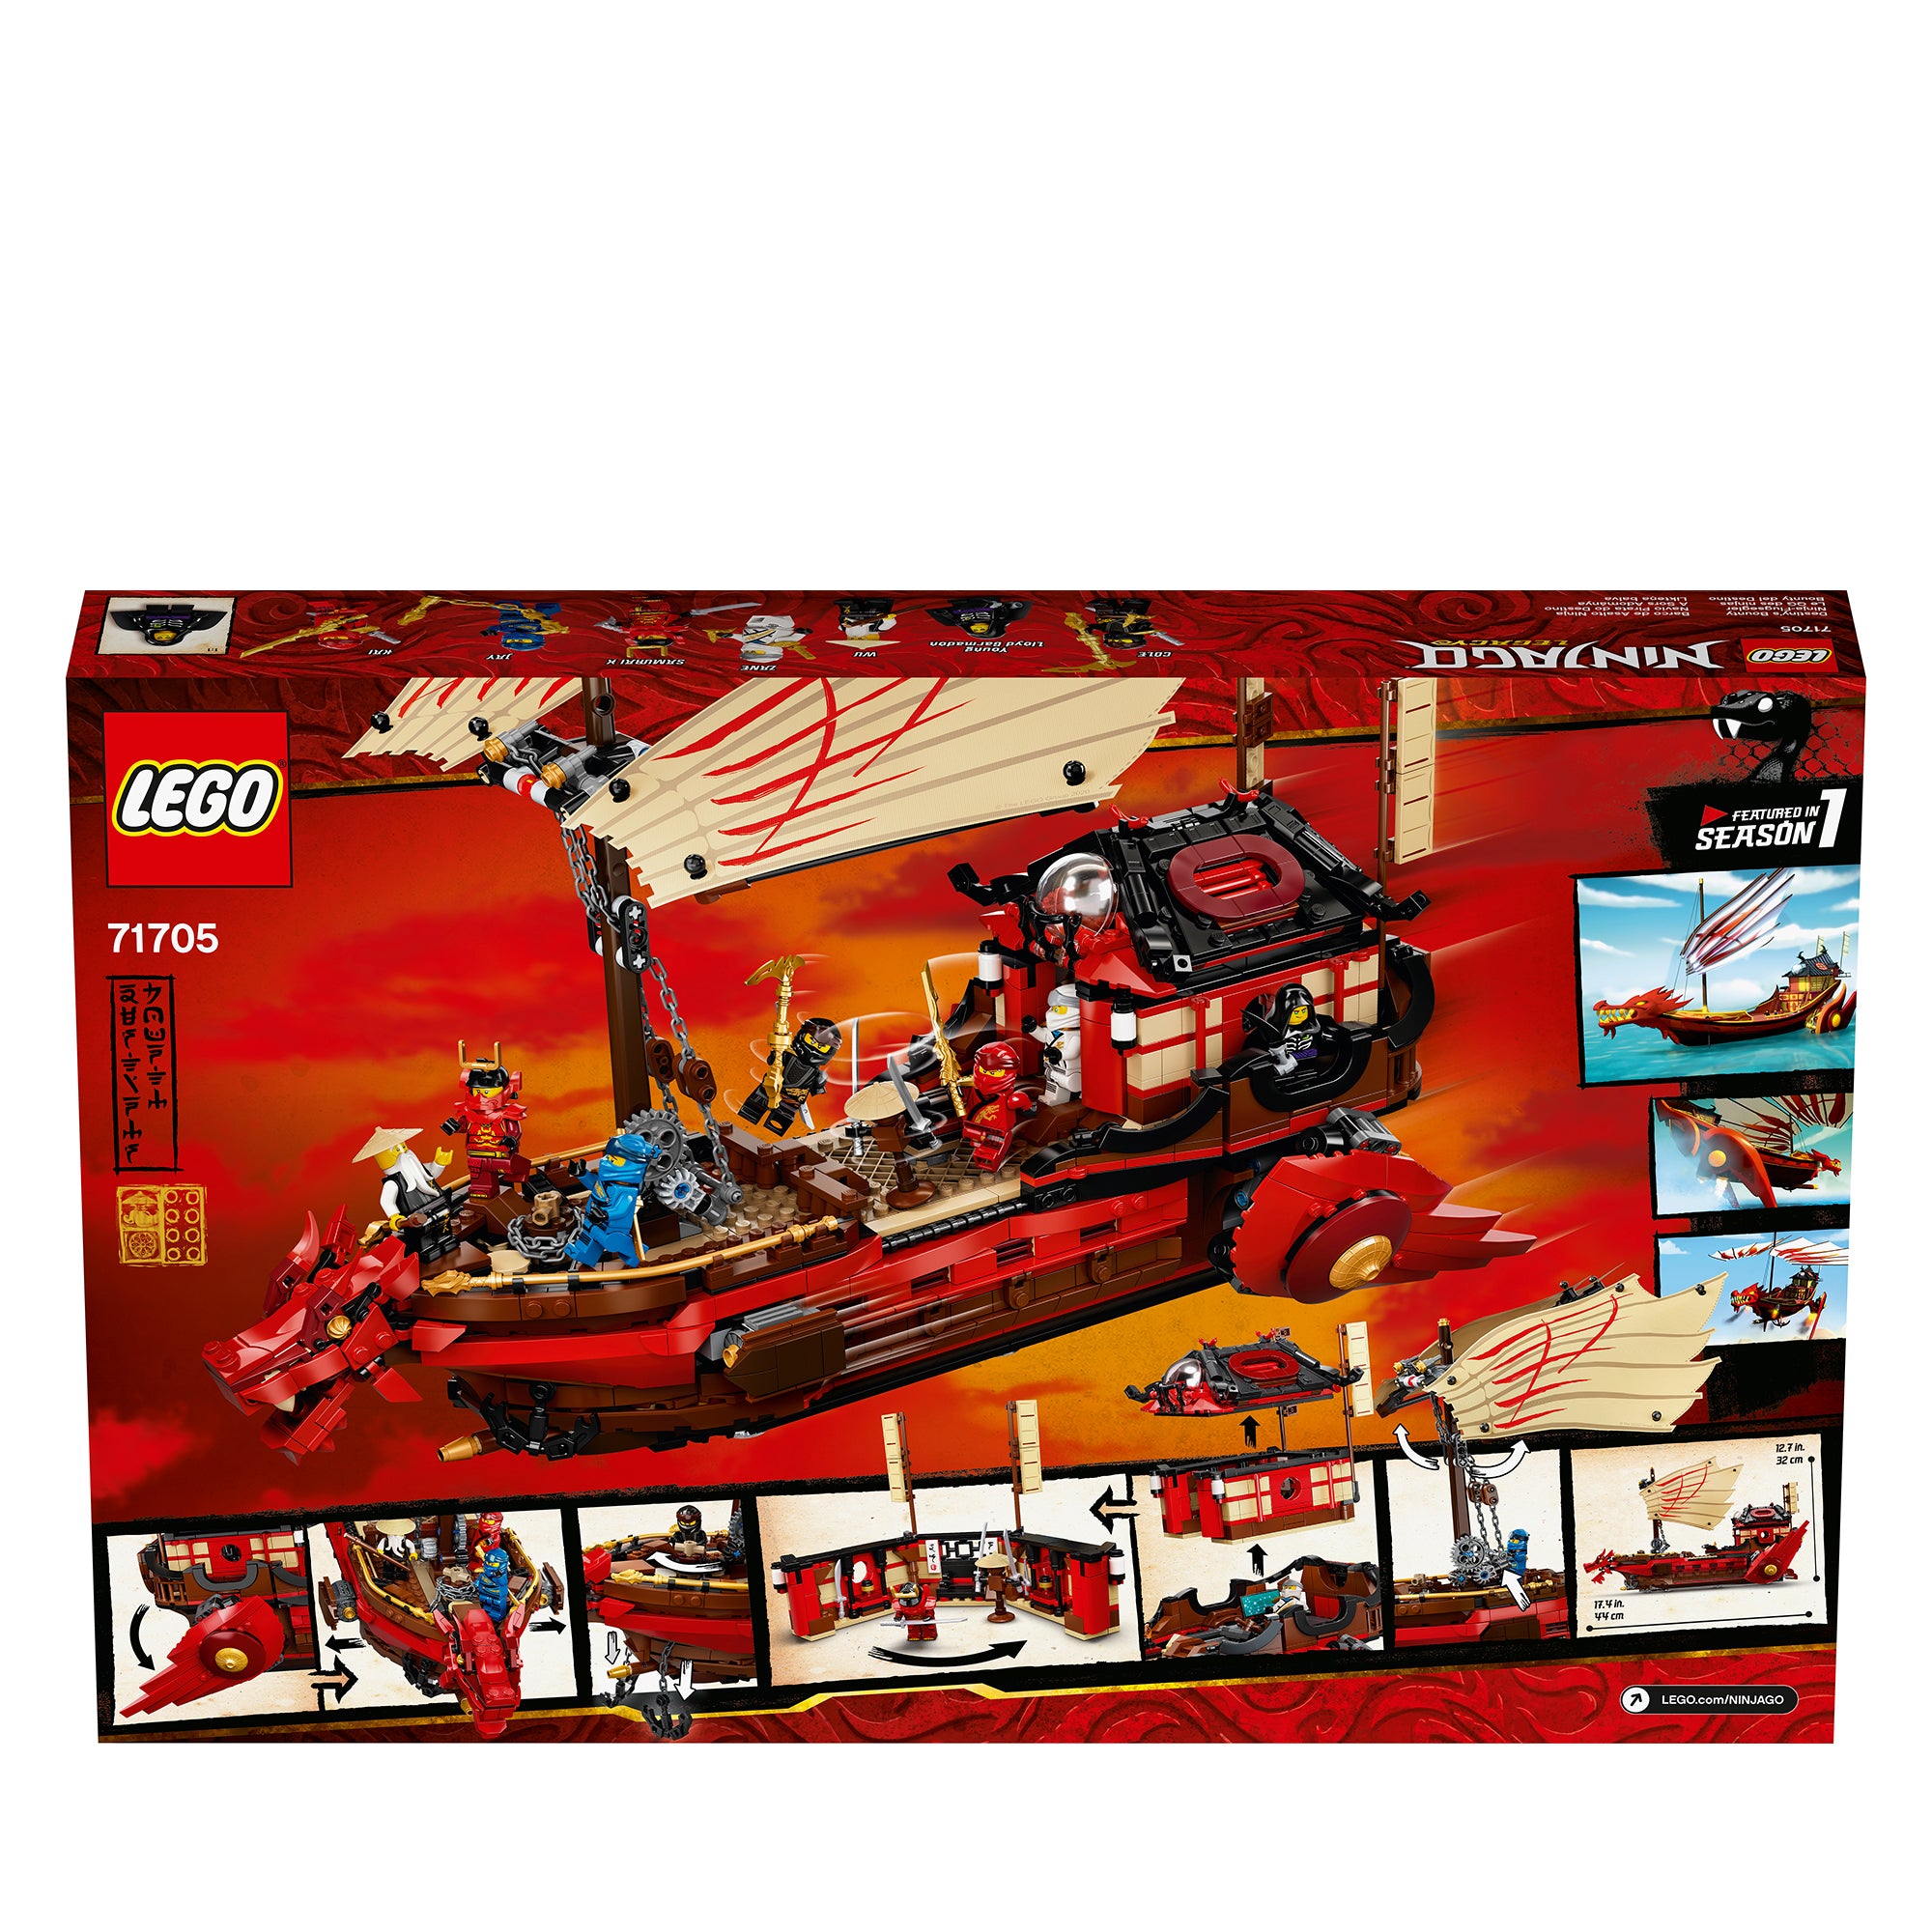 LEGO® NINJAGO Legacy Destiny's Bounty Ship Set 71705 Default Title